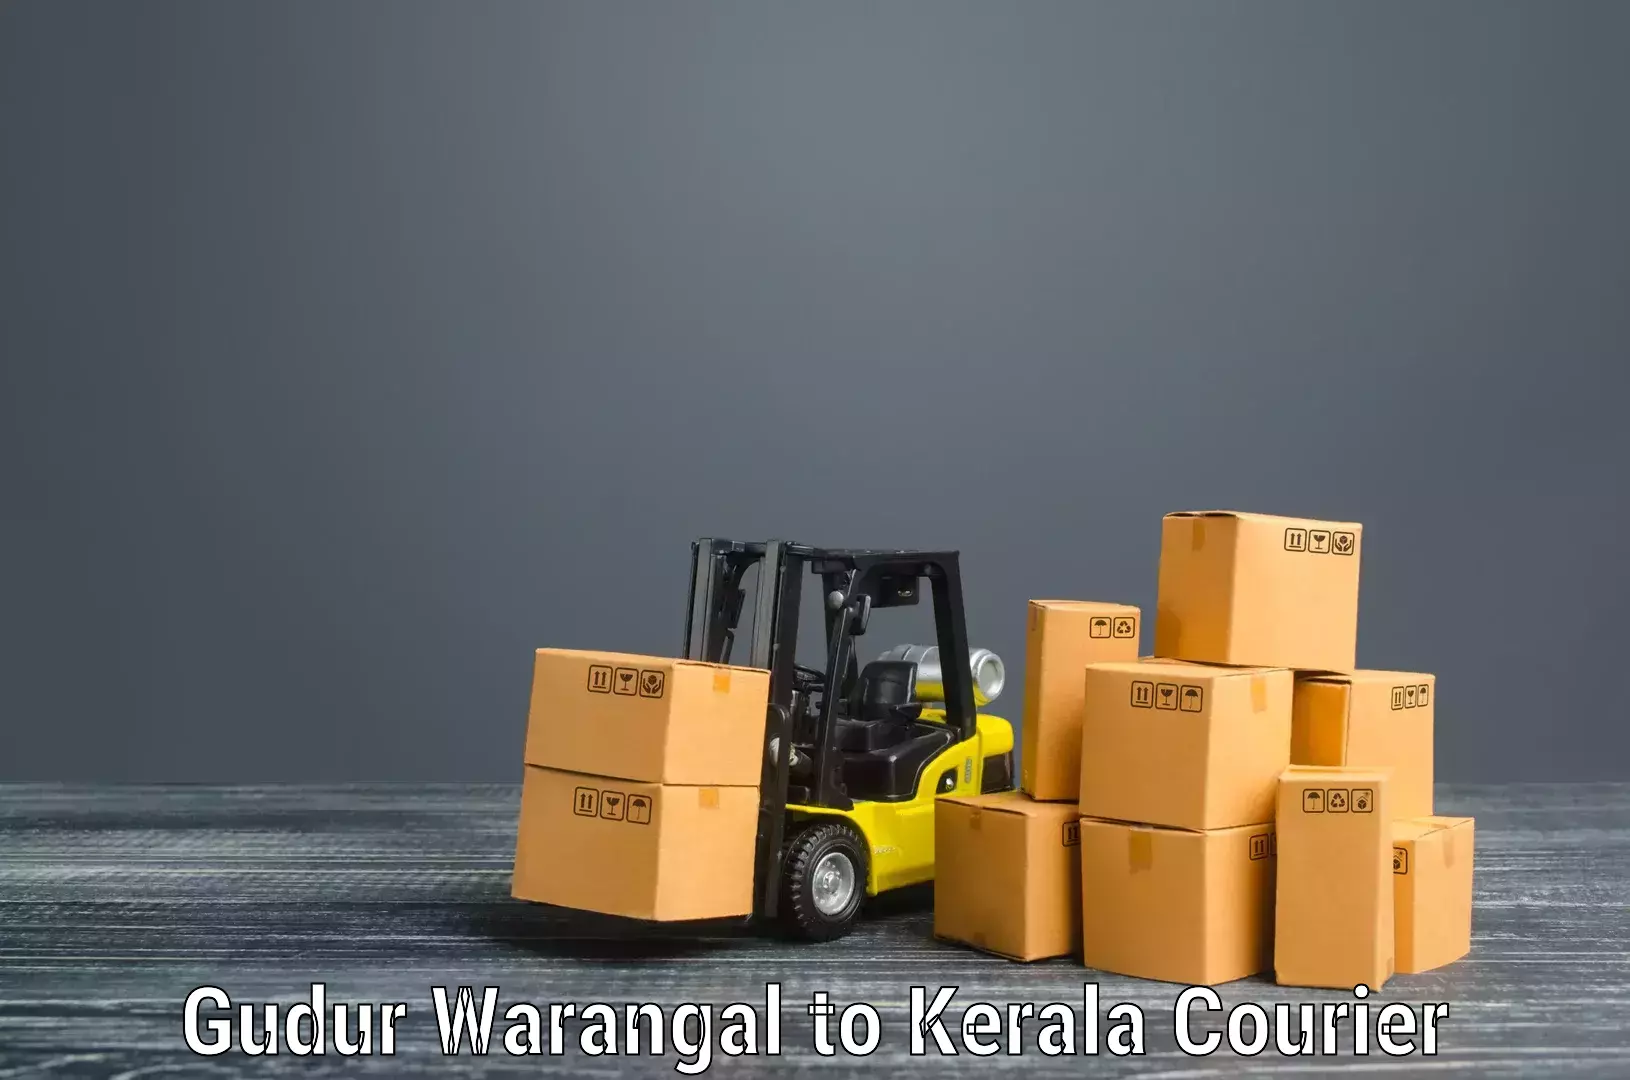 Personalized moving service Gudur Warangal to Kochi